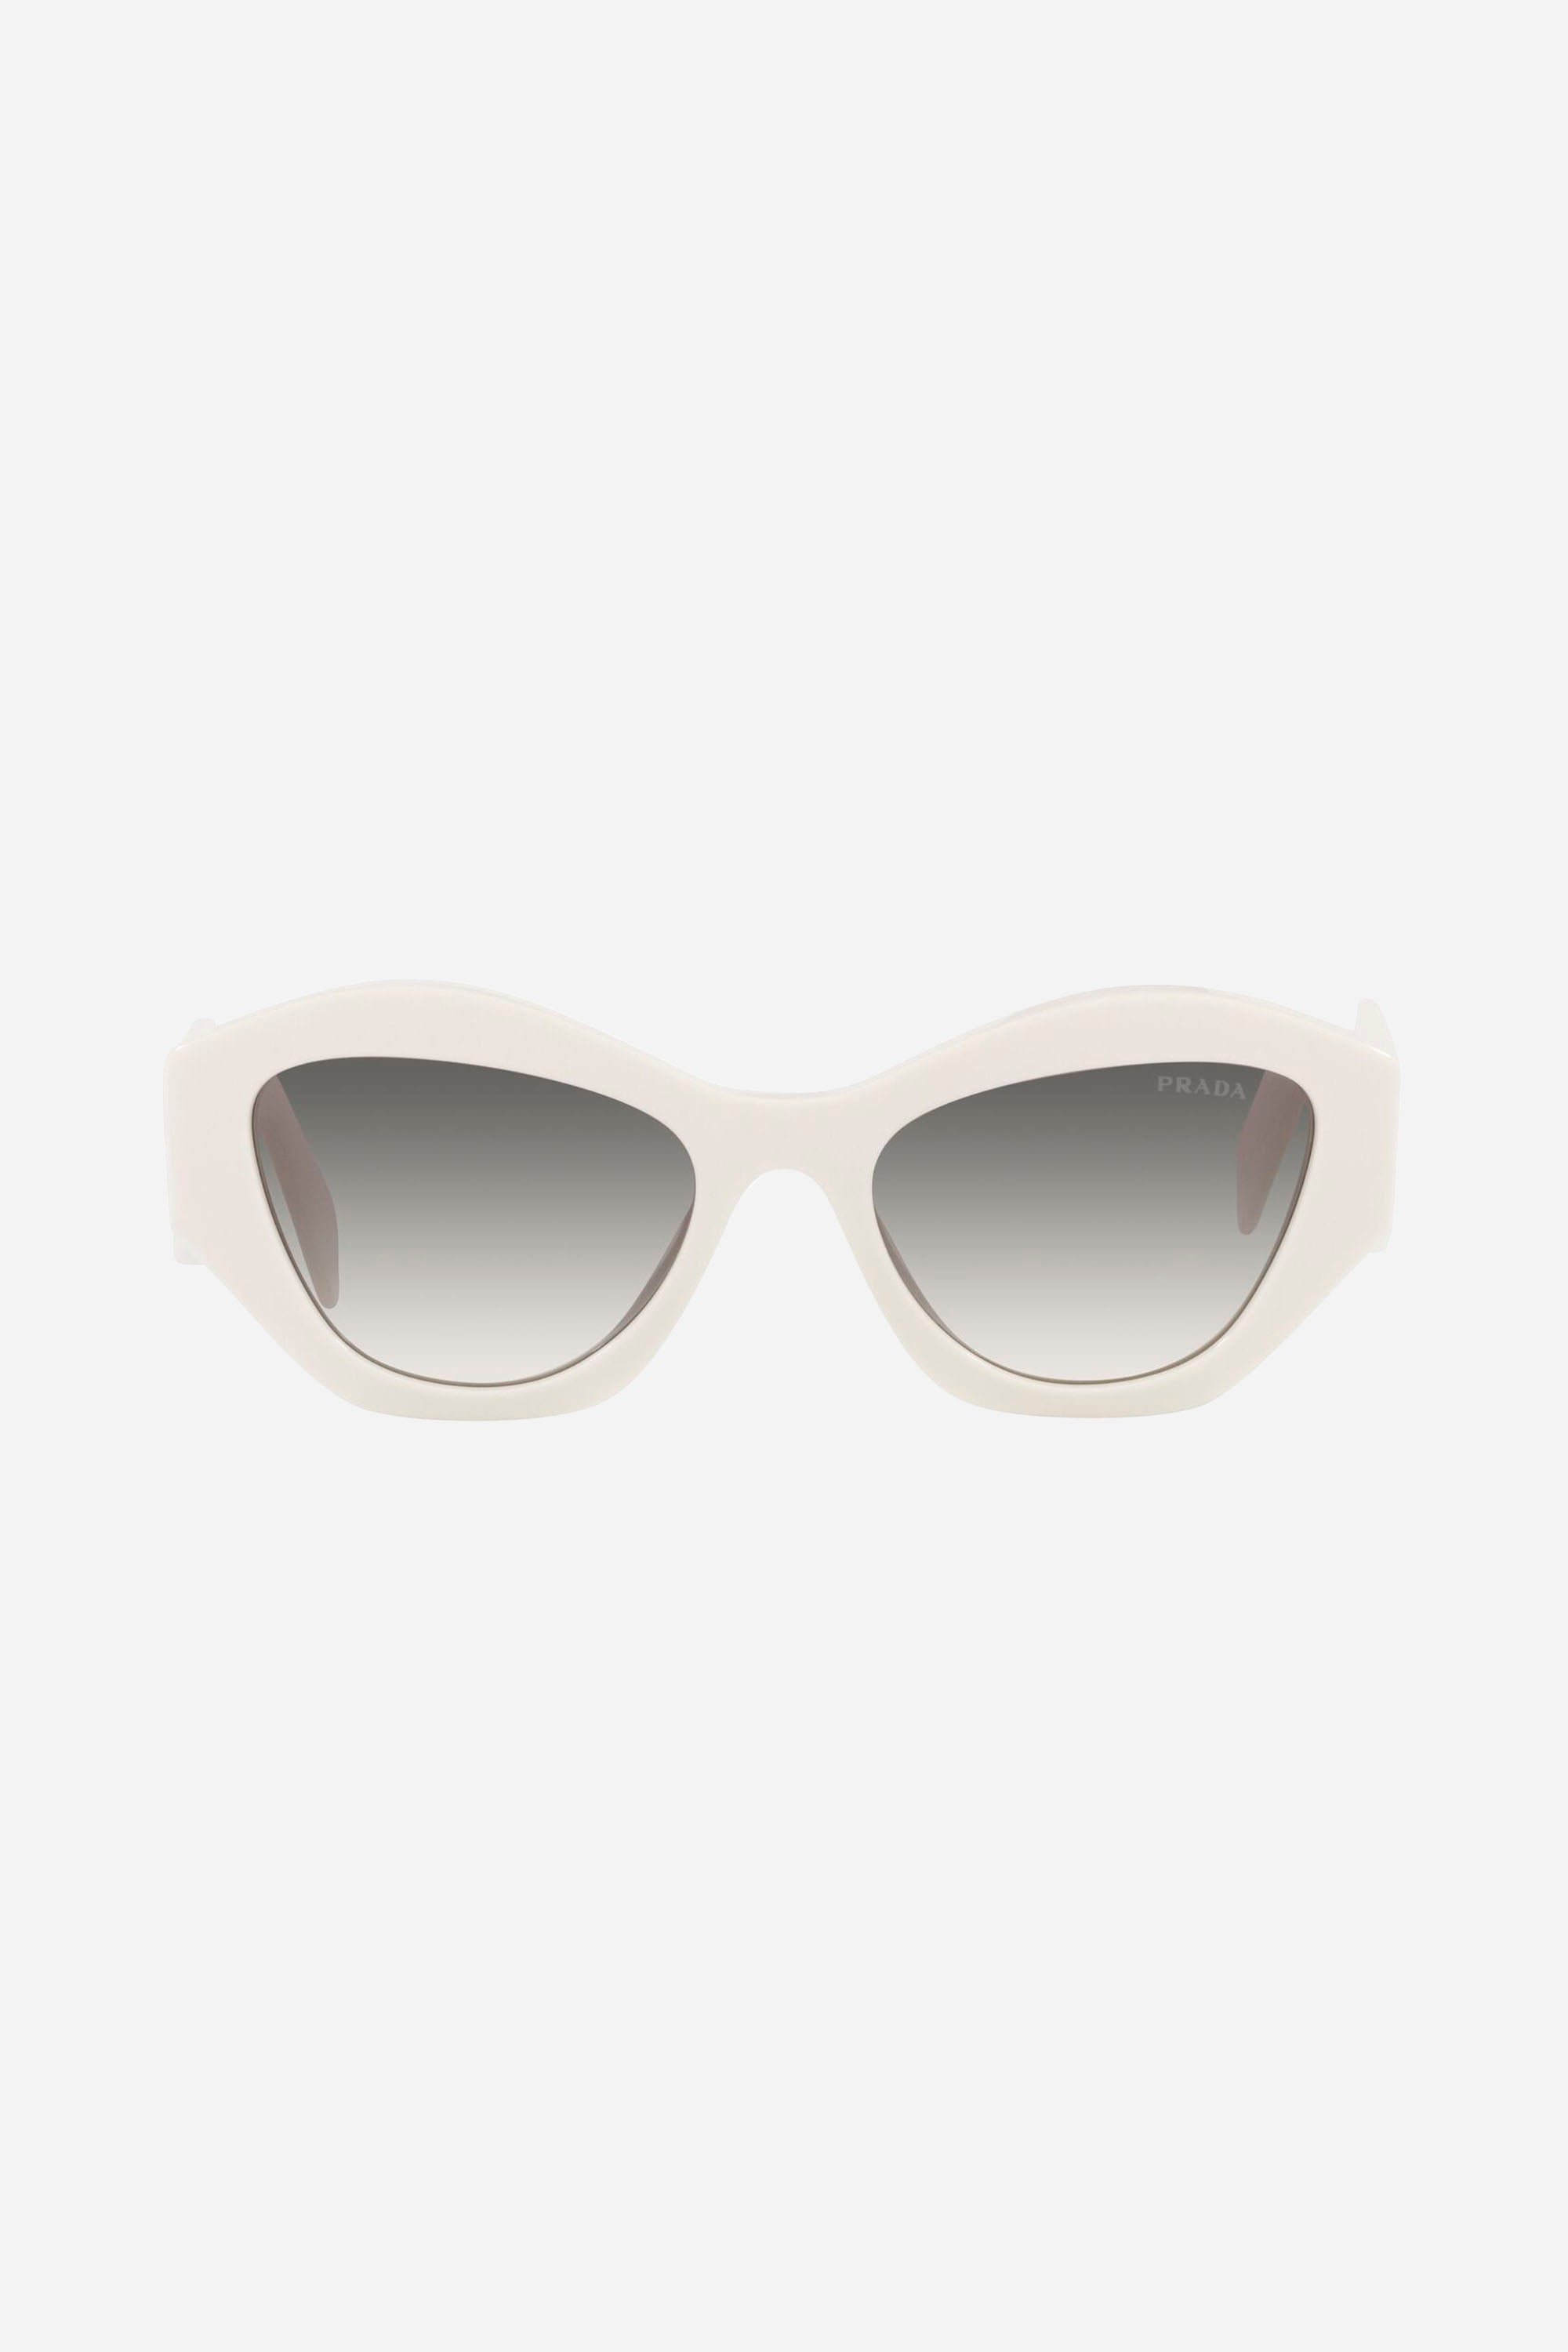 Prada oval white sunglasses featuring iconic logo - Eyewear Club